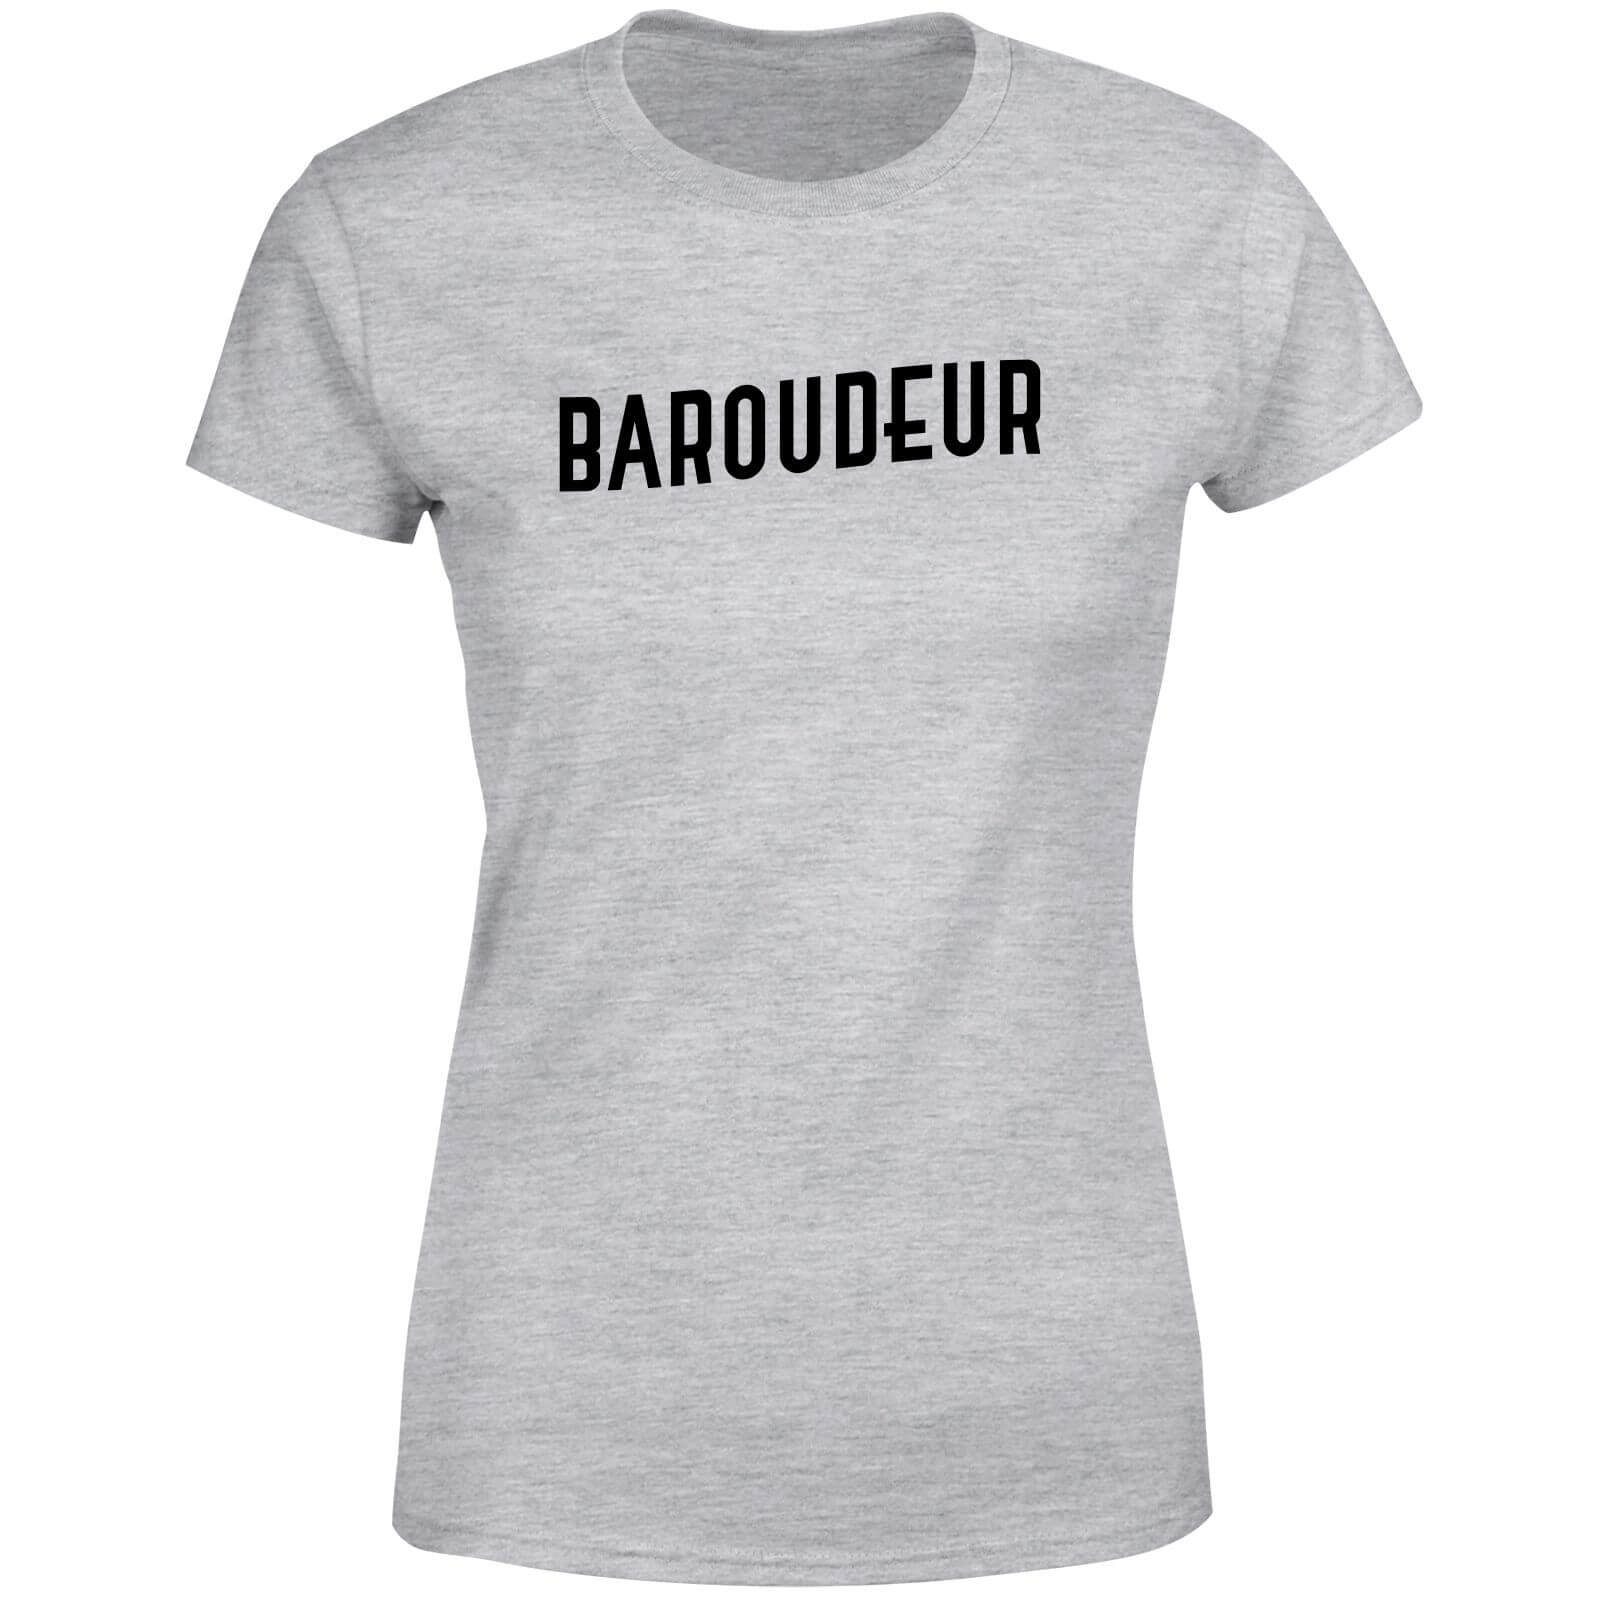 Baroudeur Women's T-Shirt - Grey - XL - Grey